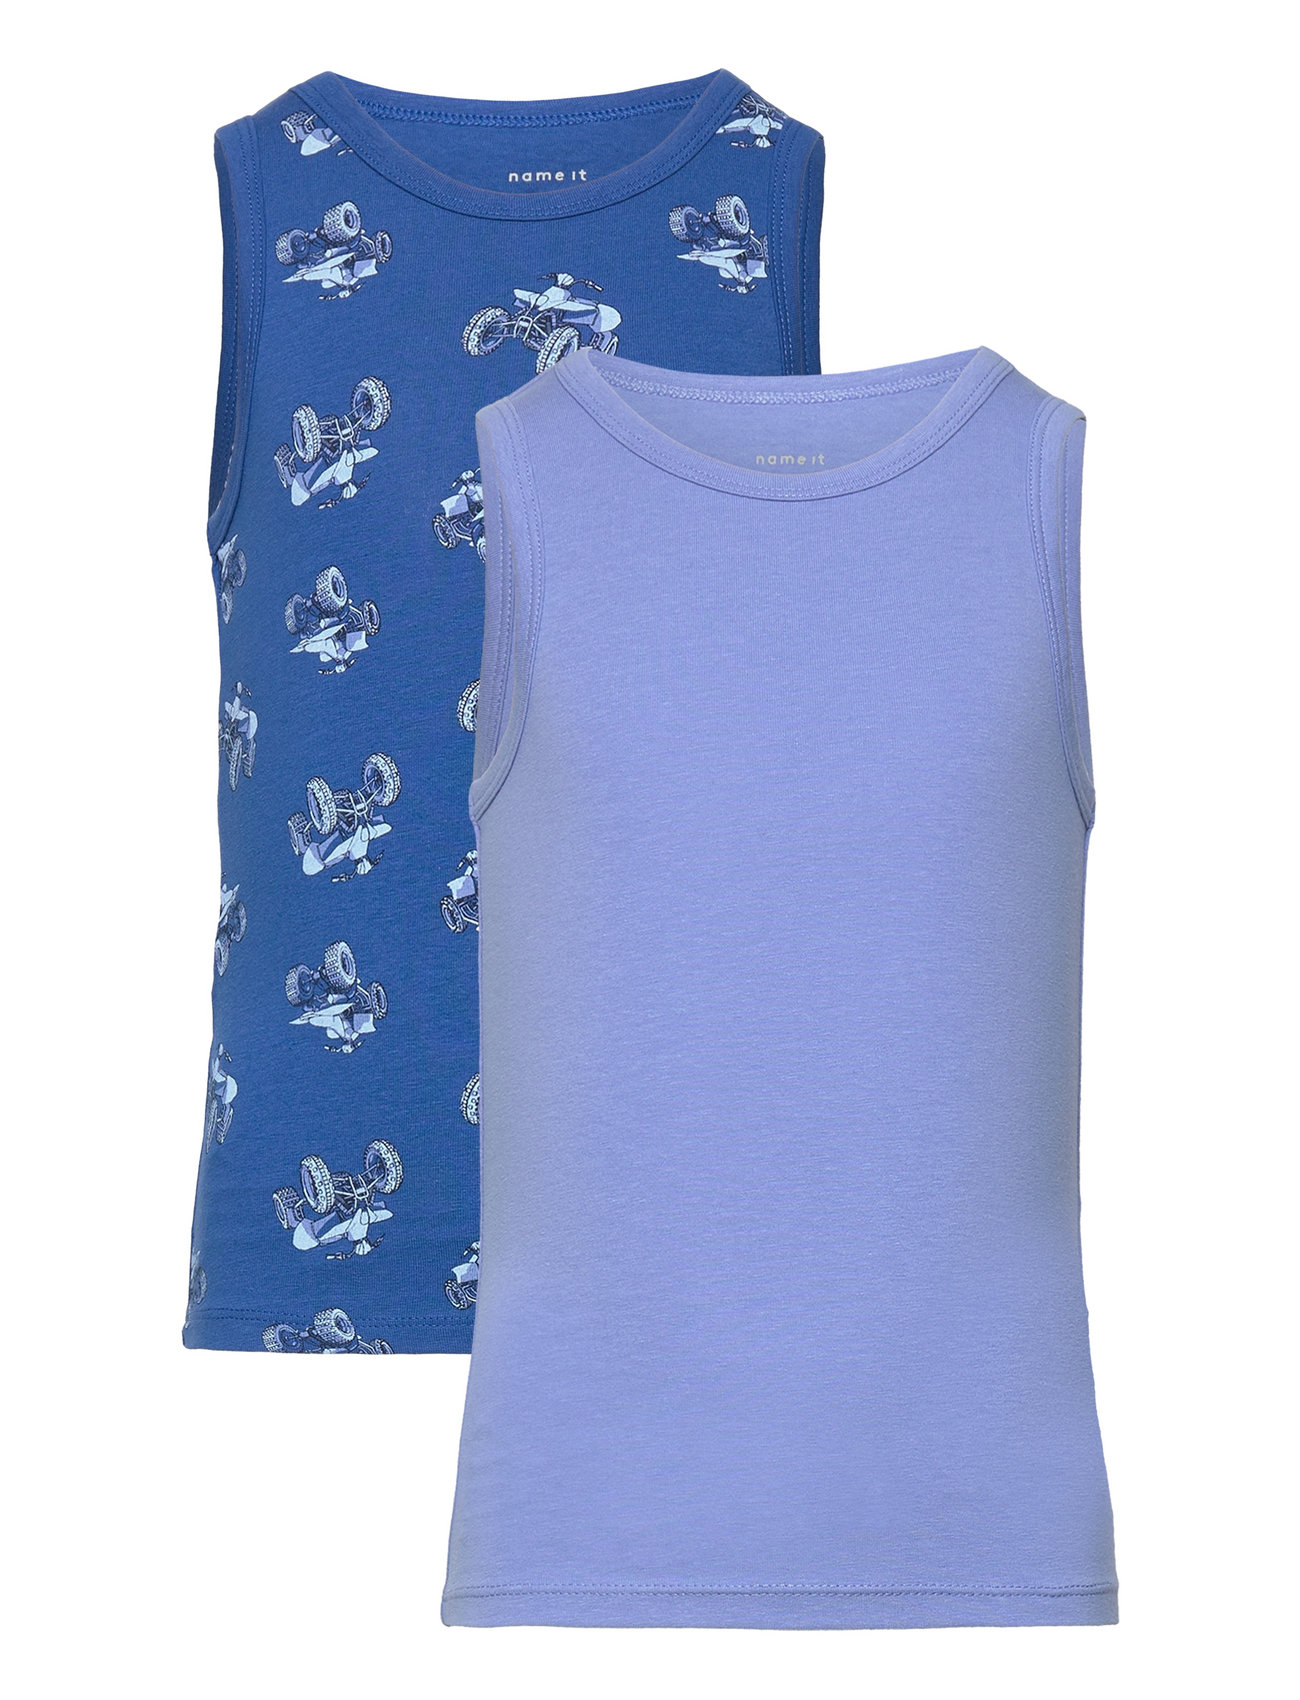 Nkmtank Top 2P Nautical Blue Atv Tops T-shirts Sleeveless Multi/patterned Name It